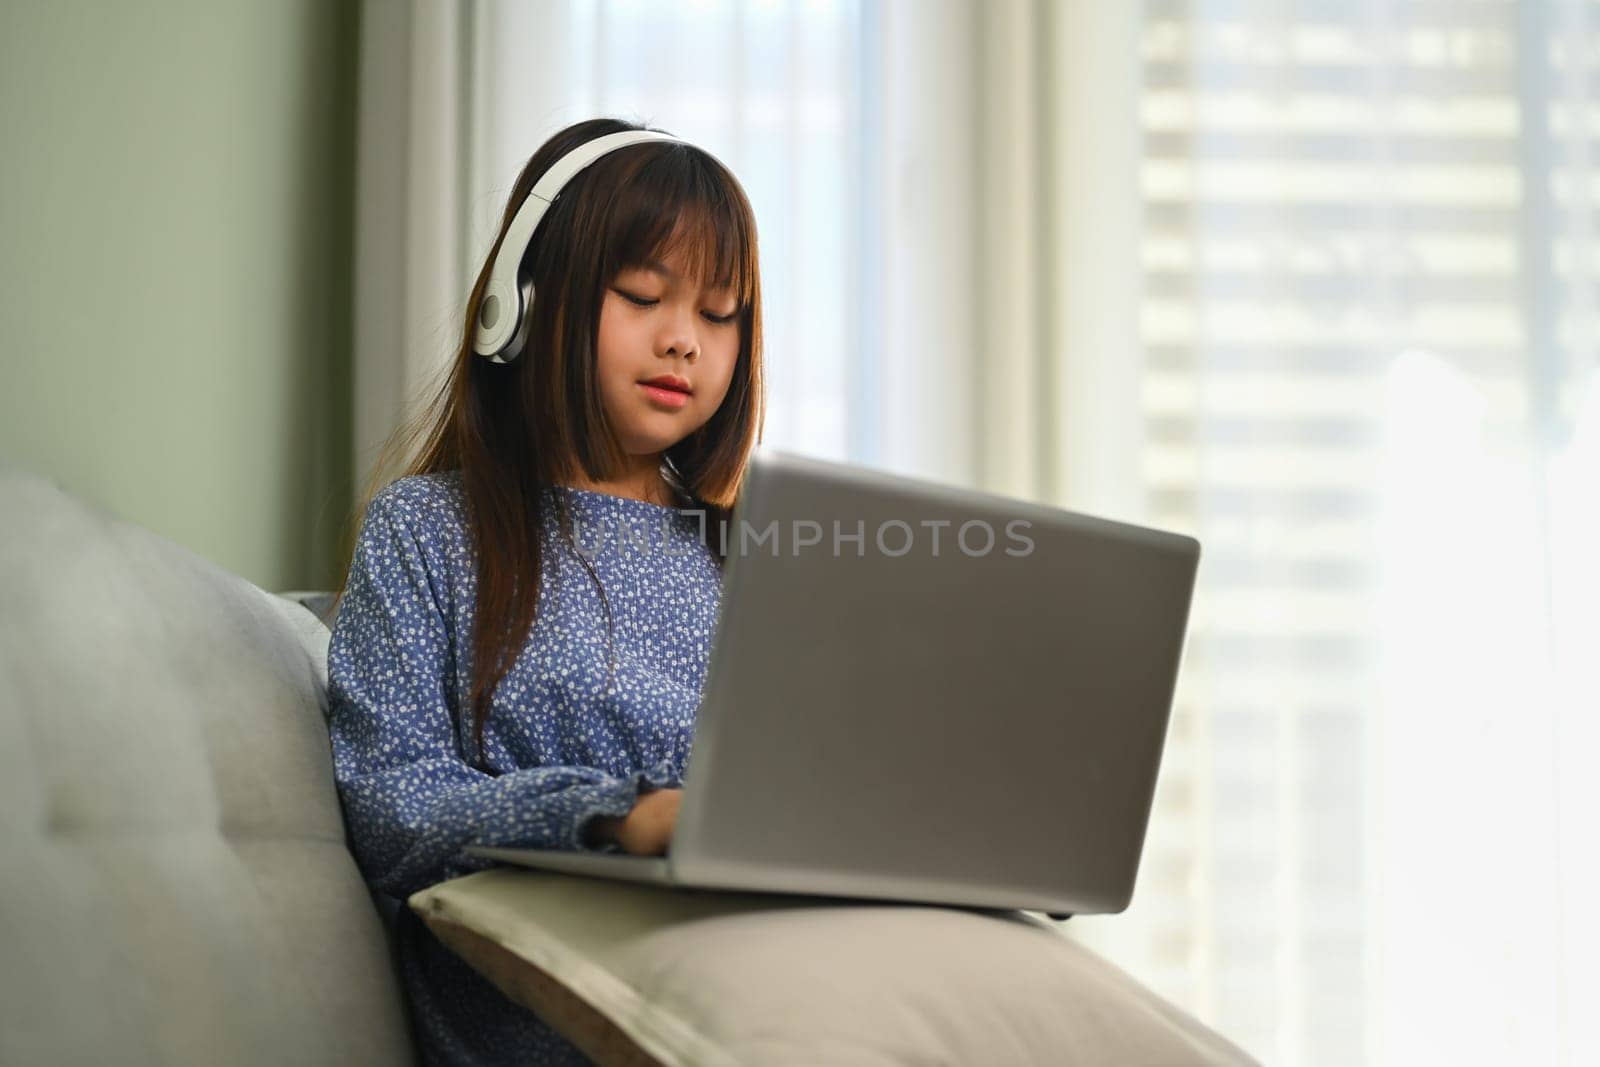 Cute schoolgirl in headphone watching online virtual class on laptop. Education concept